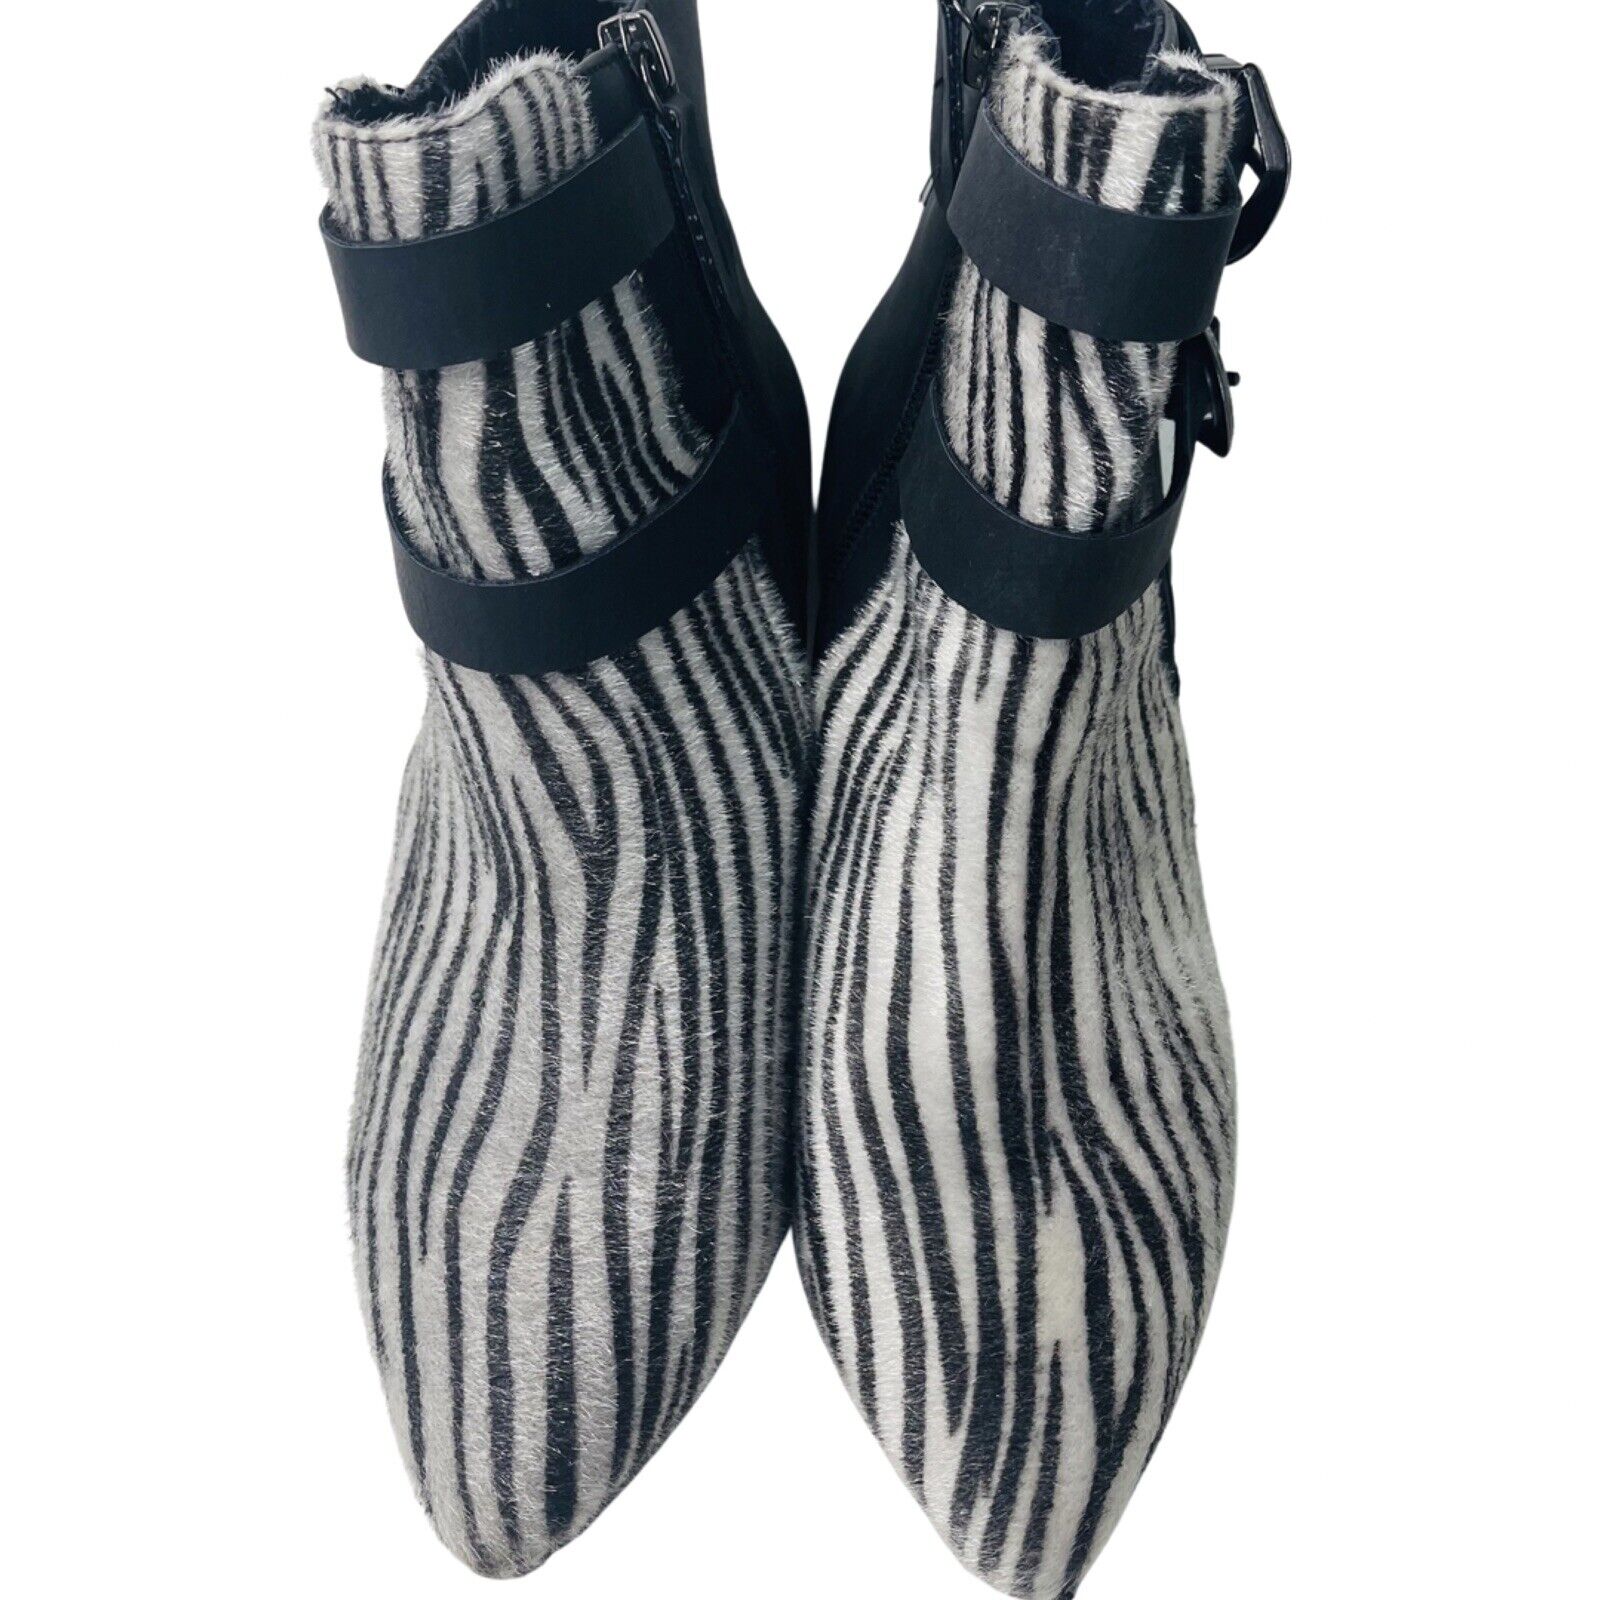 MOJO MOXY Zebra print heeled ankle boots size 8.5